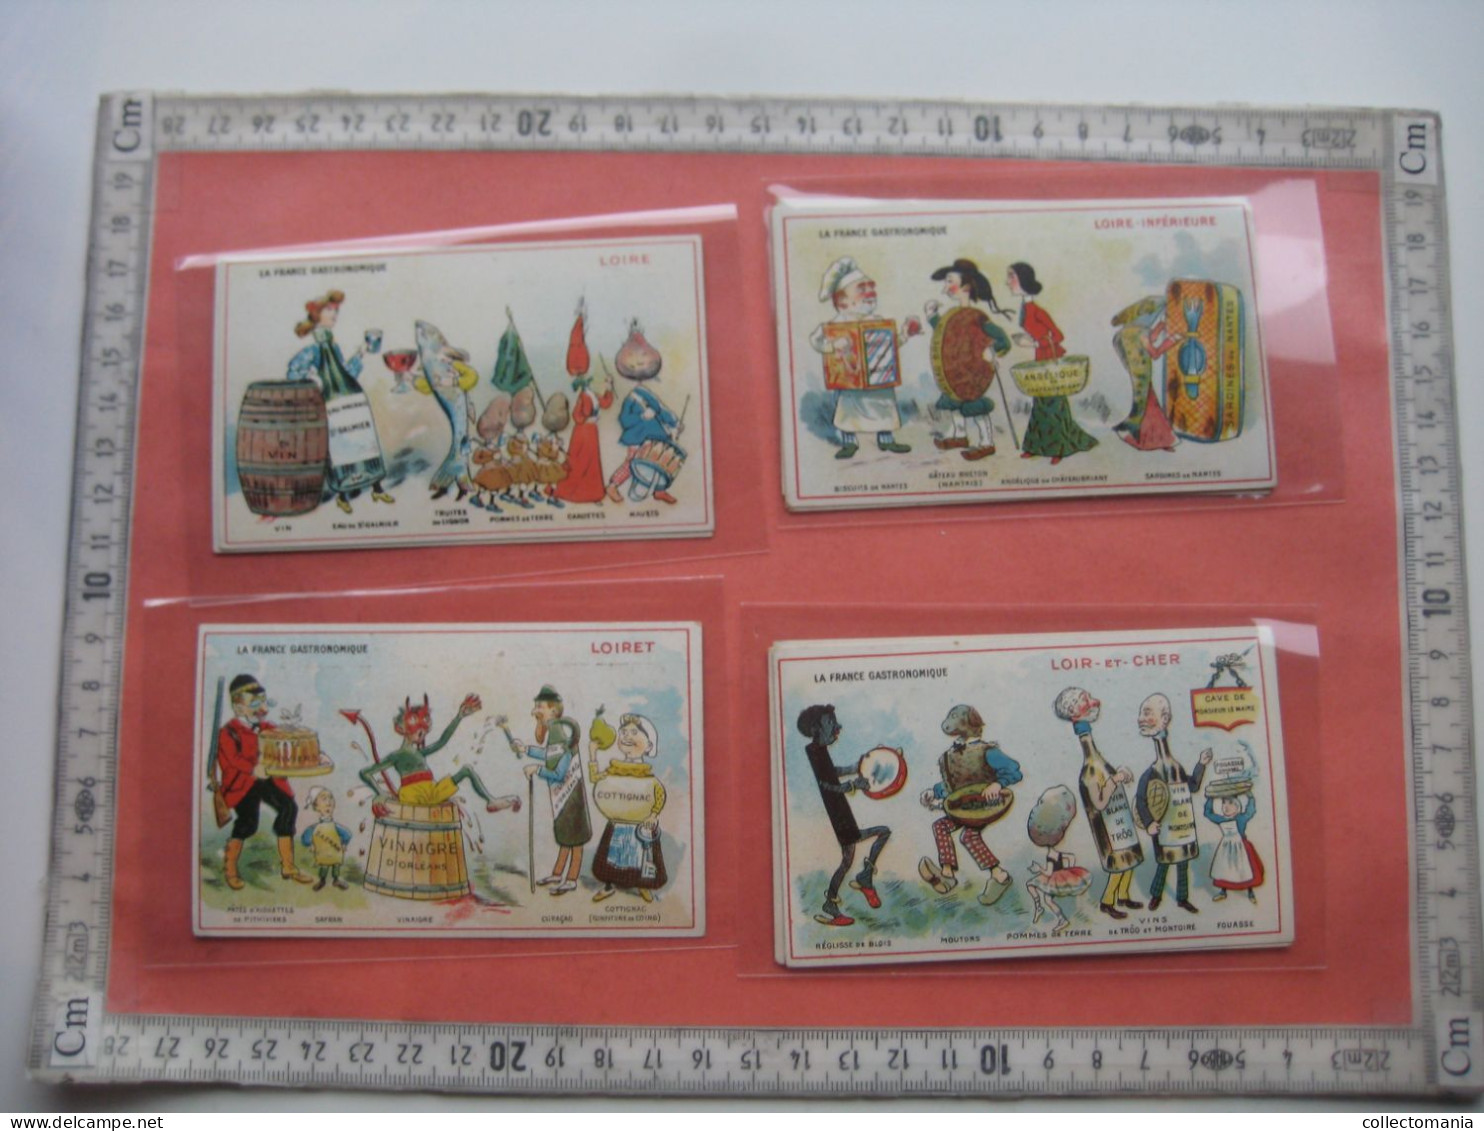 33 trade cards Anthropomorphic dressed animals acting like people, veggie people fruit, dressed food,  c1890 Vegetable